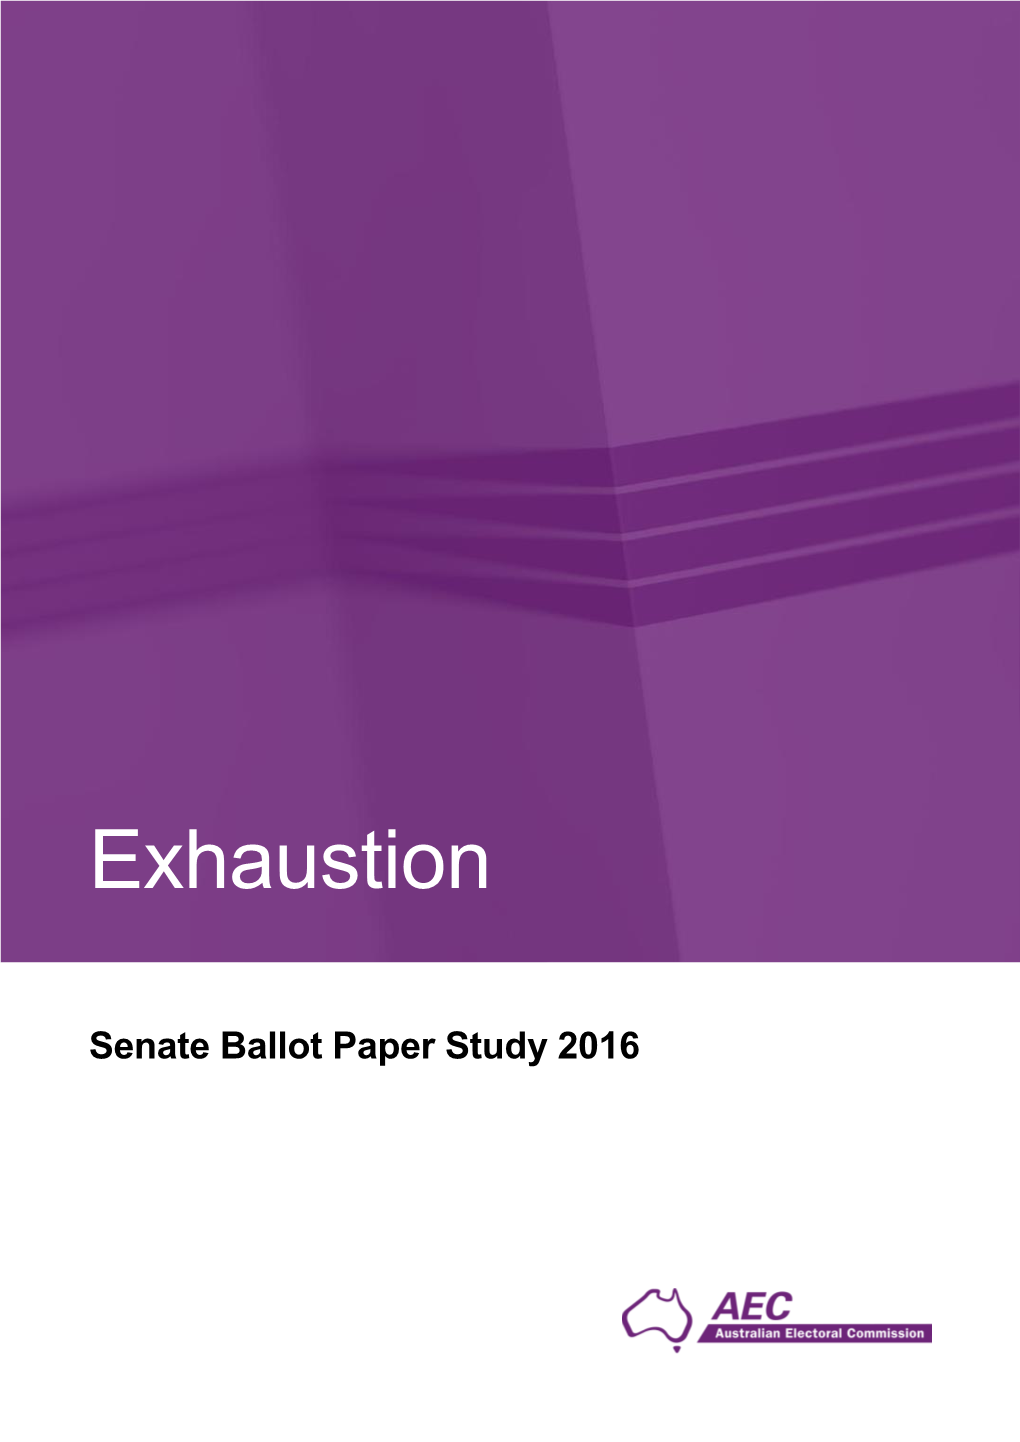 Exhaustion – Senate Ballot Paper Study 2016 Page 1